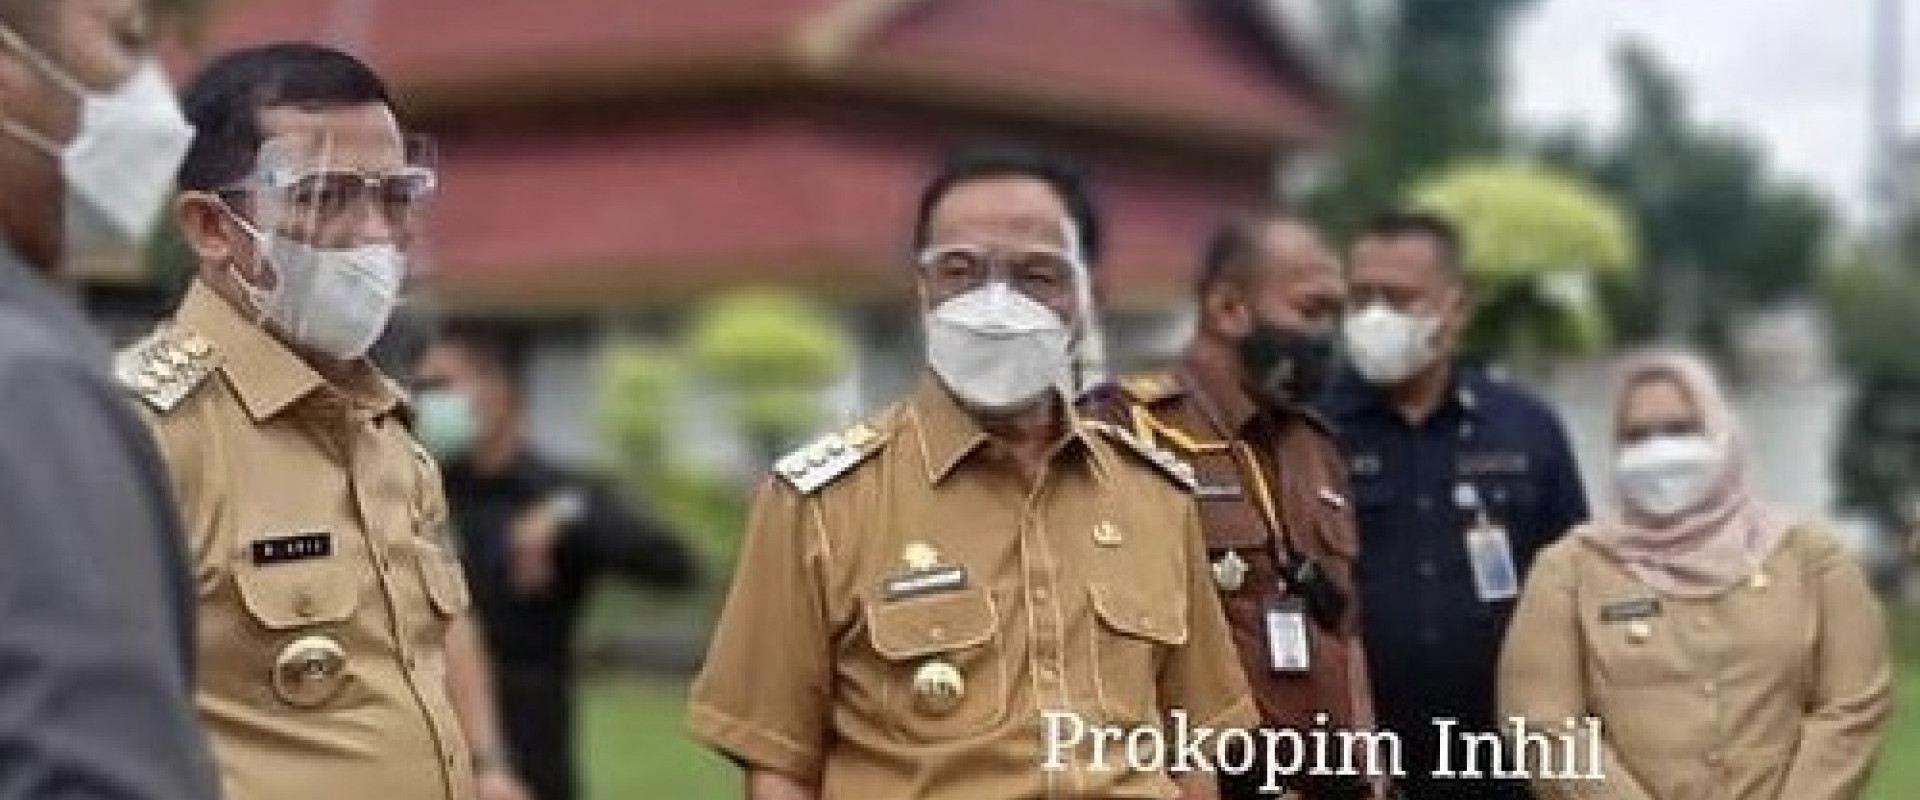 Bupati Inhil Ikuti Sekaligus Mendengarkan Lansung Arahan Presiden RI Ir.H.Jokowidodo Mengenai Penanggulangan Penyebaran Covid-19